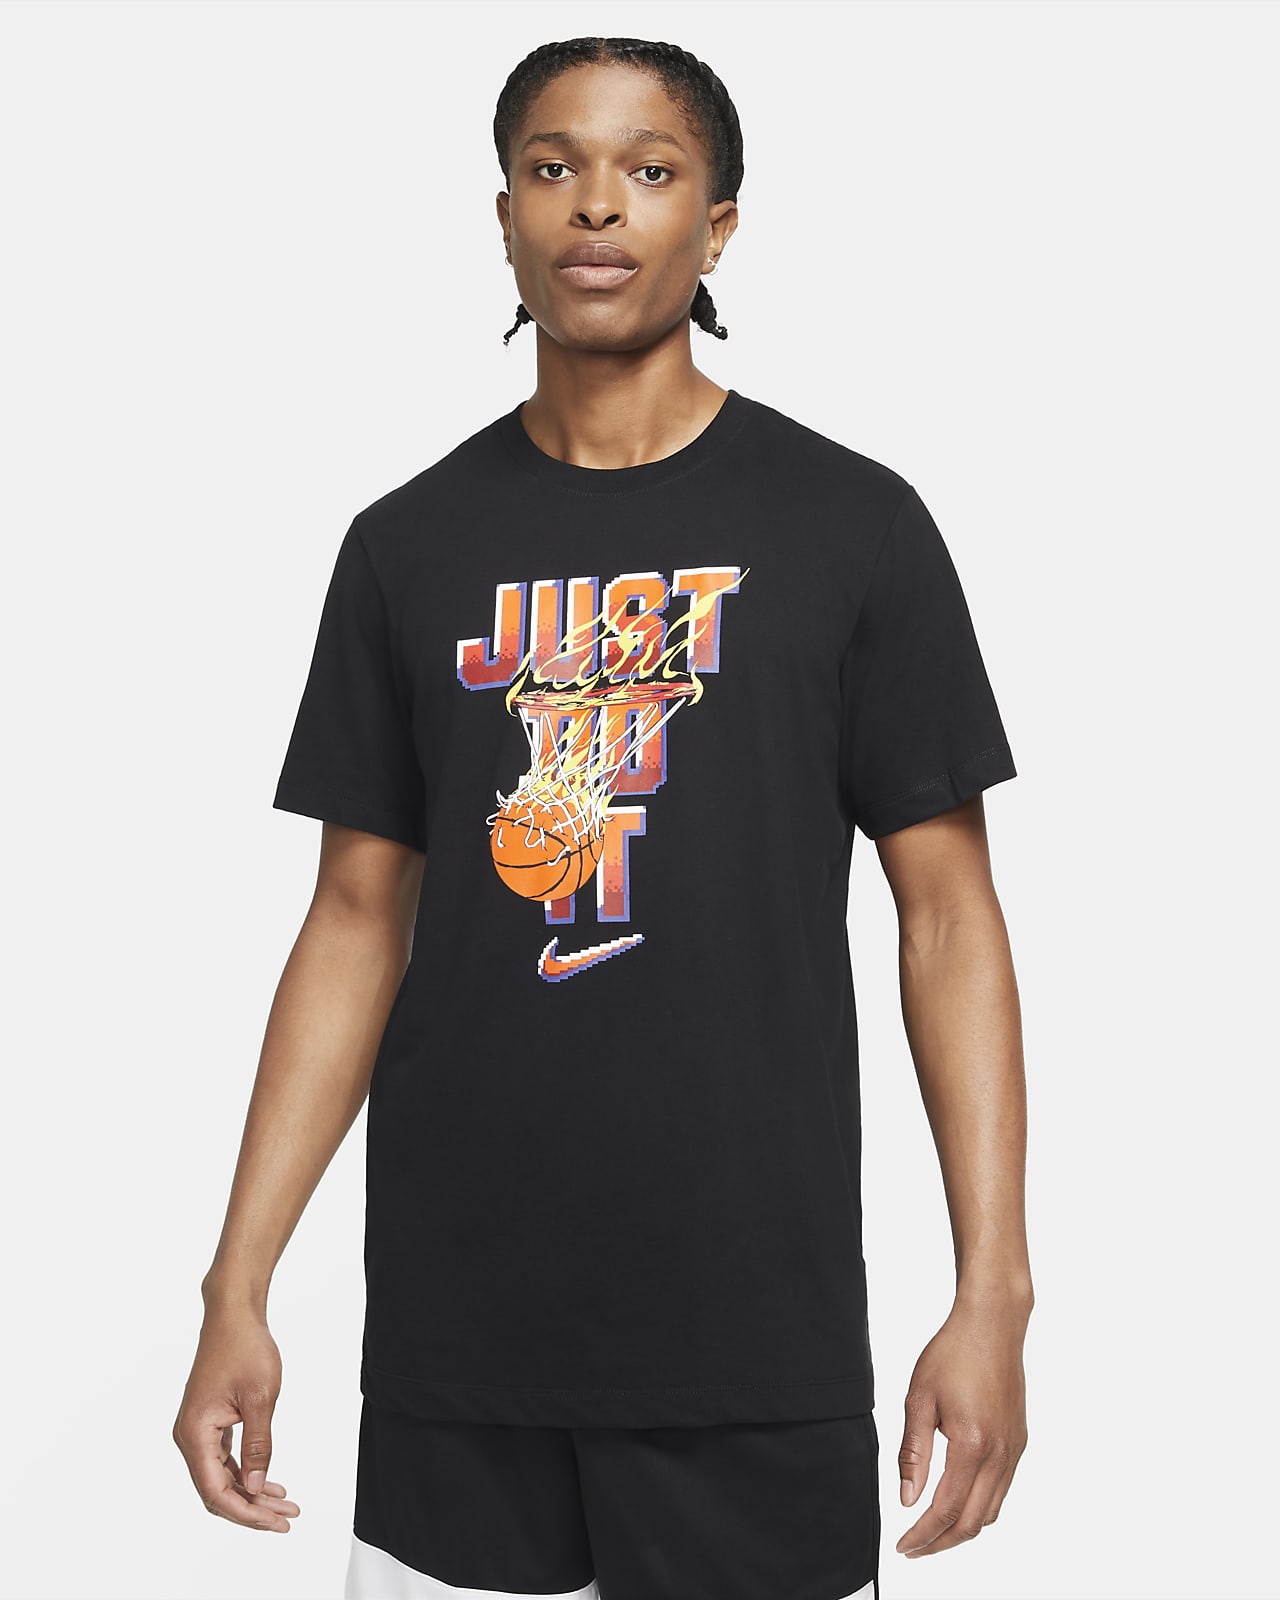 Nike shirt just do it - Alle Favoriten unter allen Nike shirt just do it